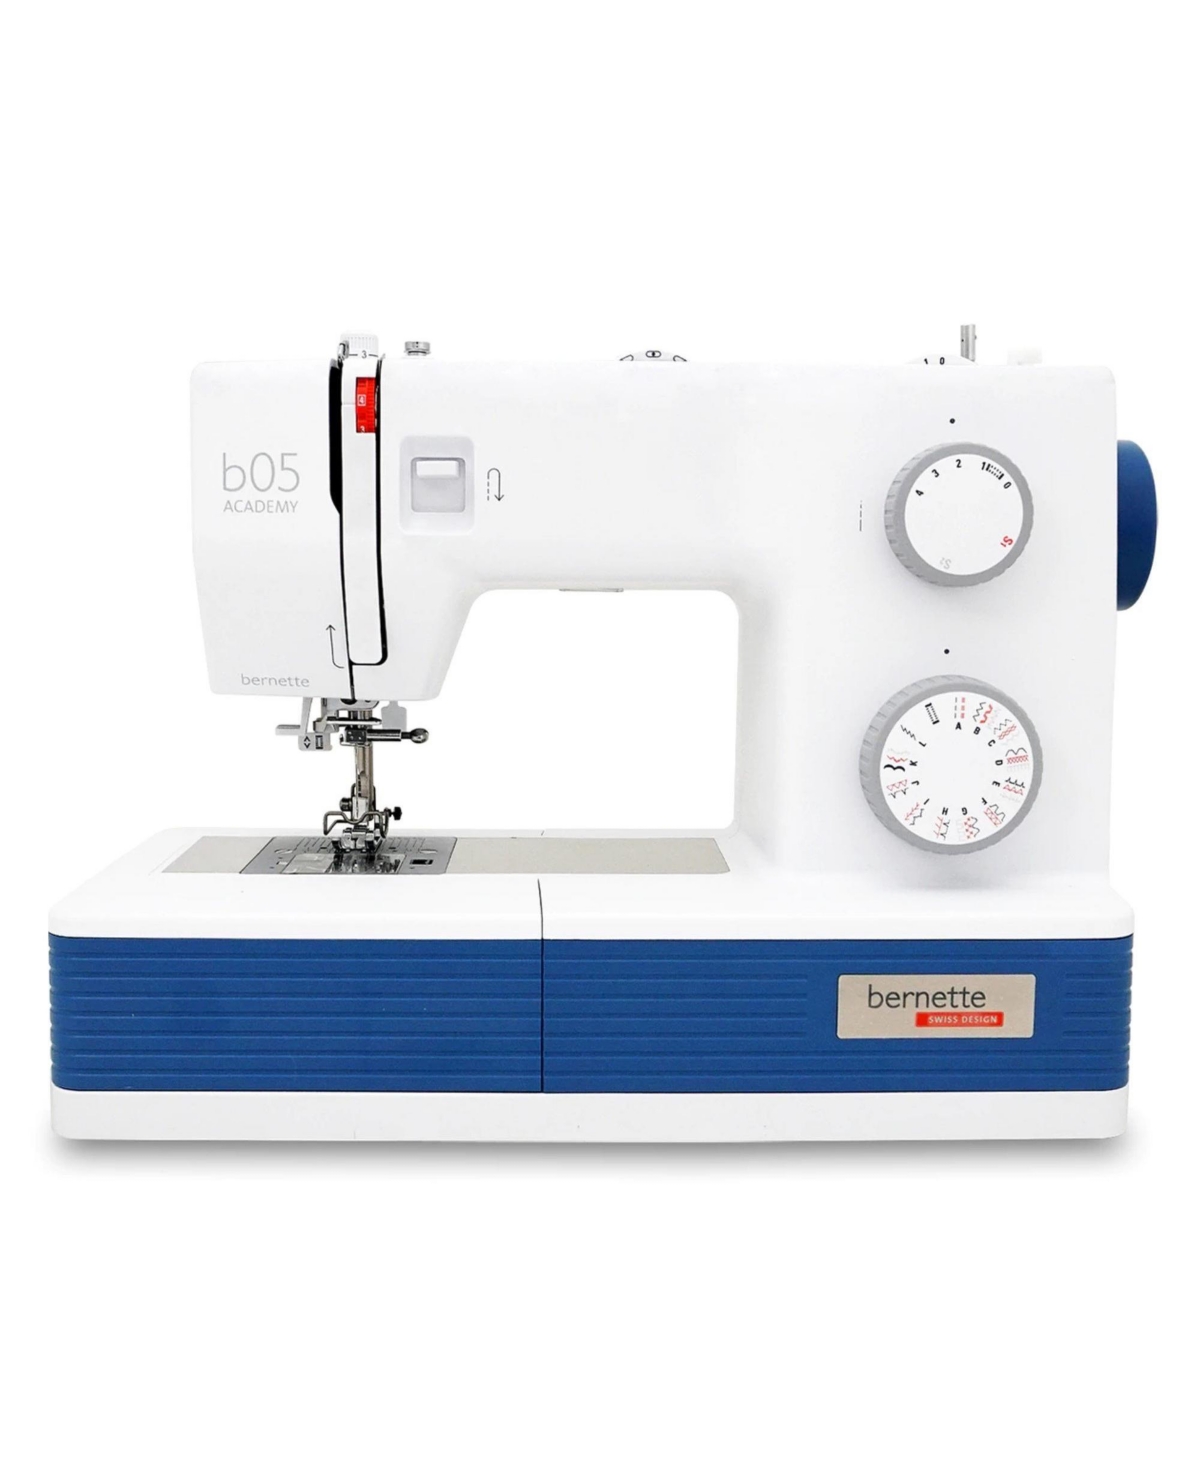 b05 Academy Swiss Design Mechanical Sewing Machine - White